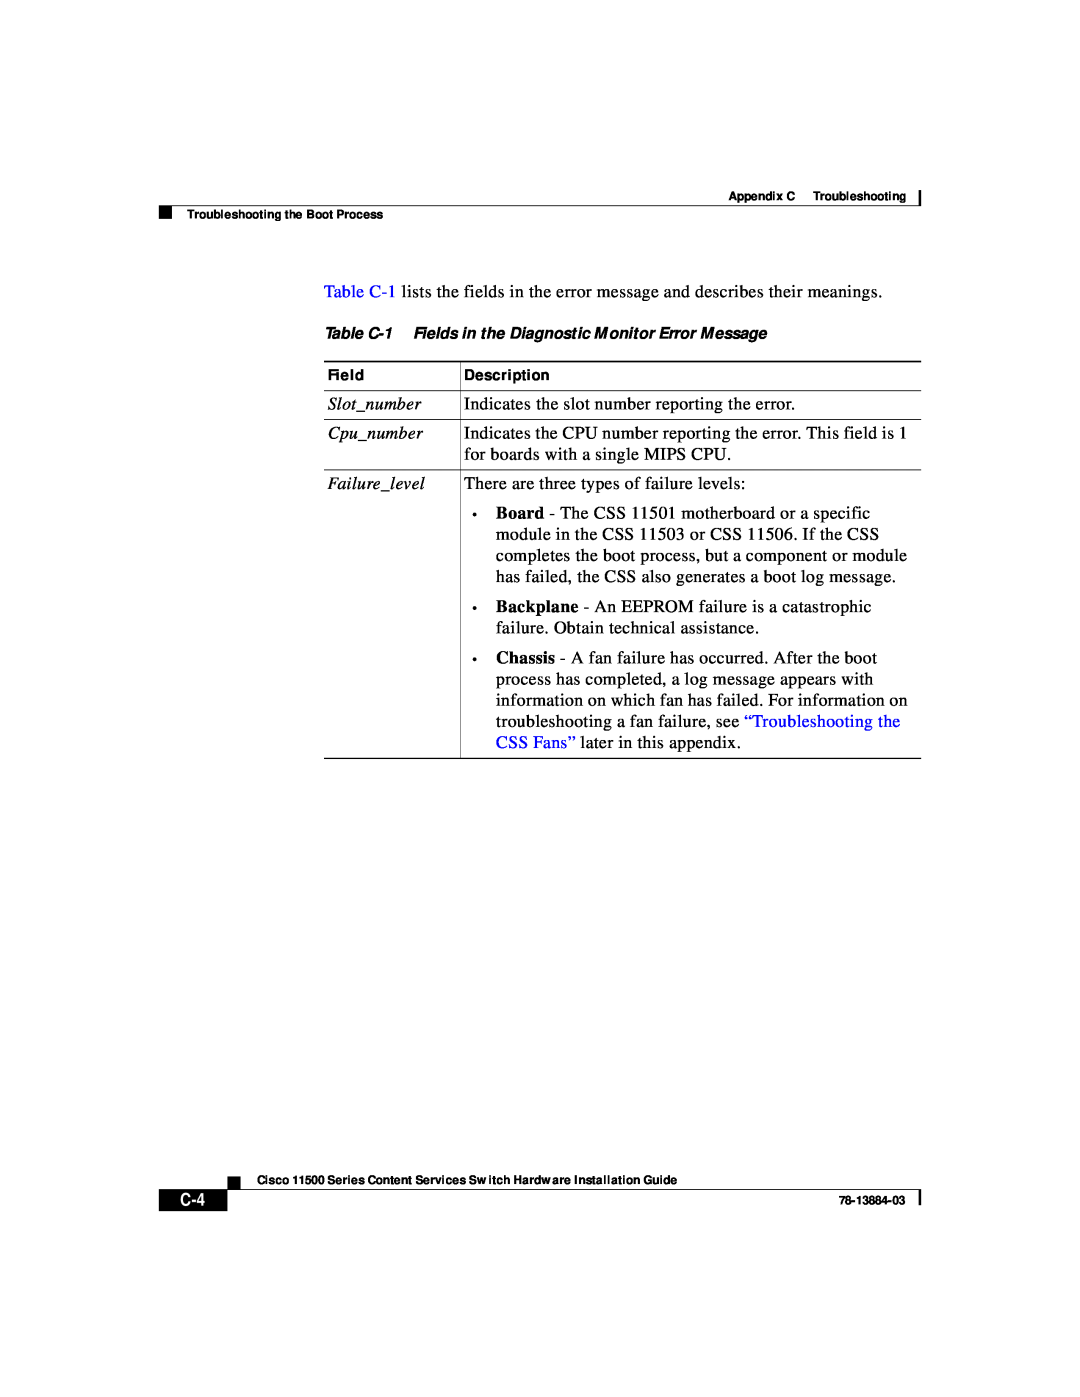 Cisco Systems 11500 Series manual Field, Description 